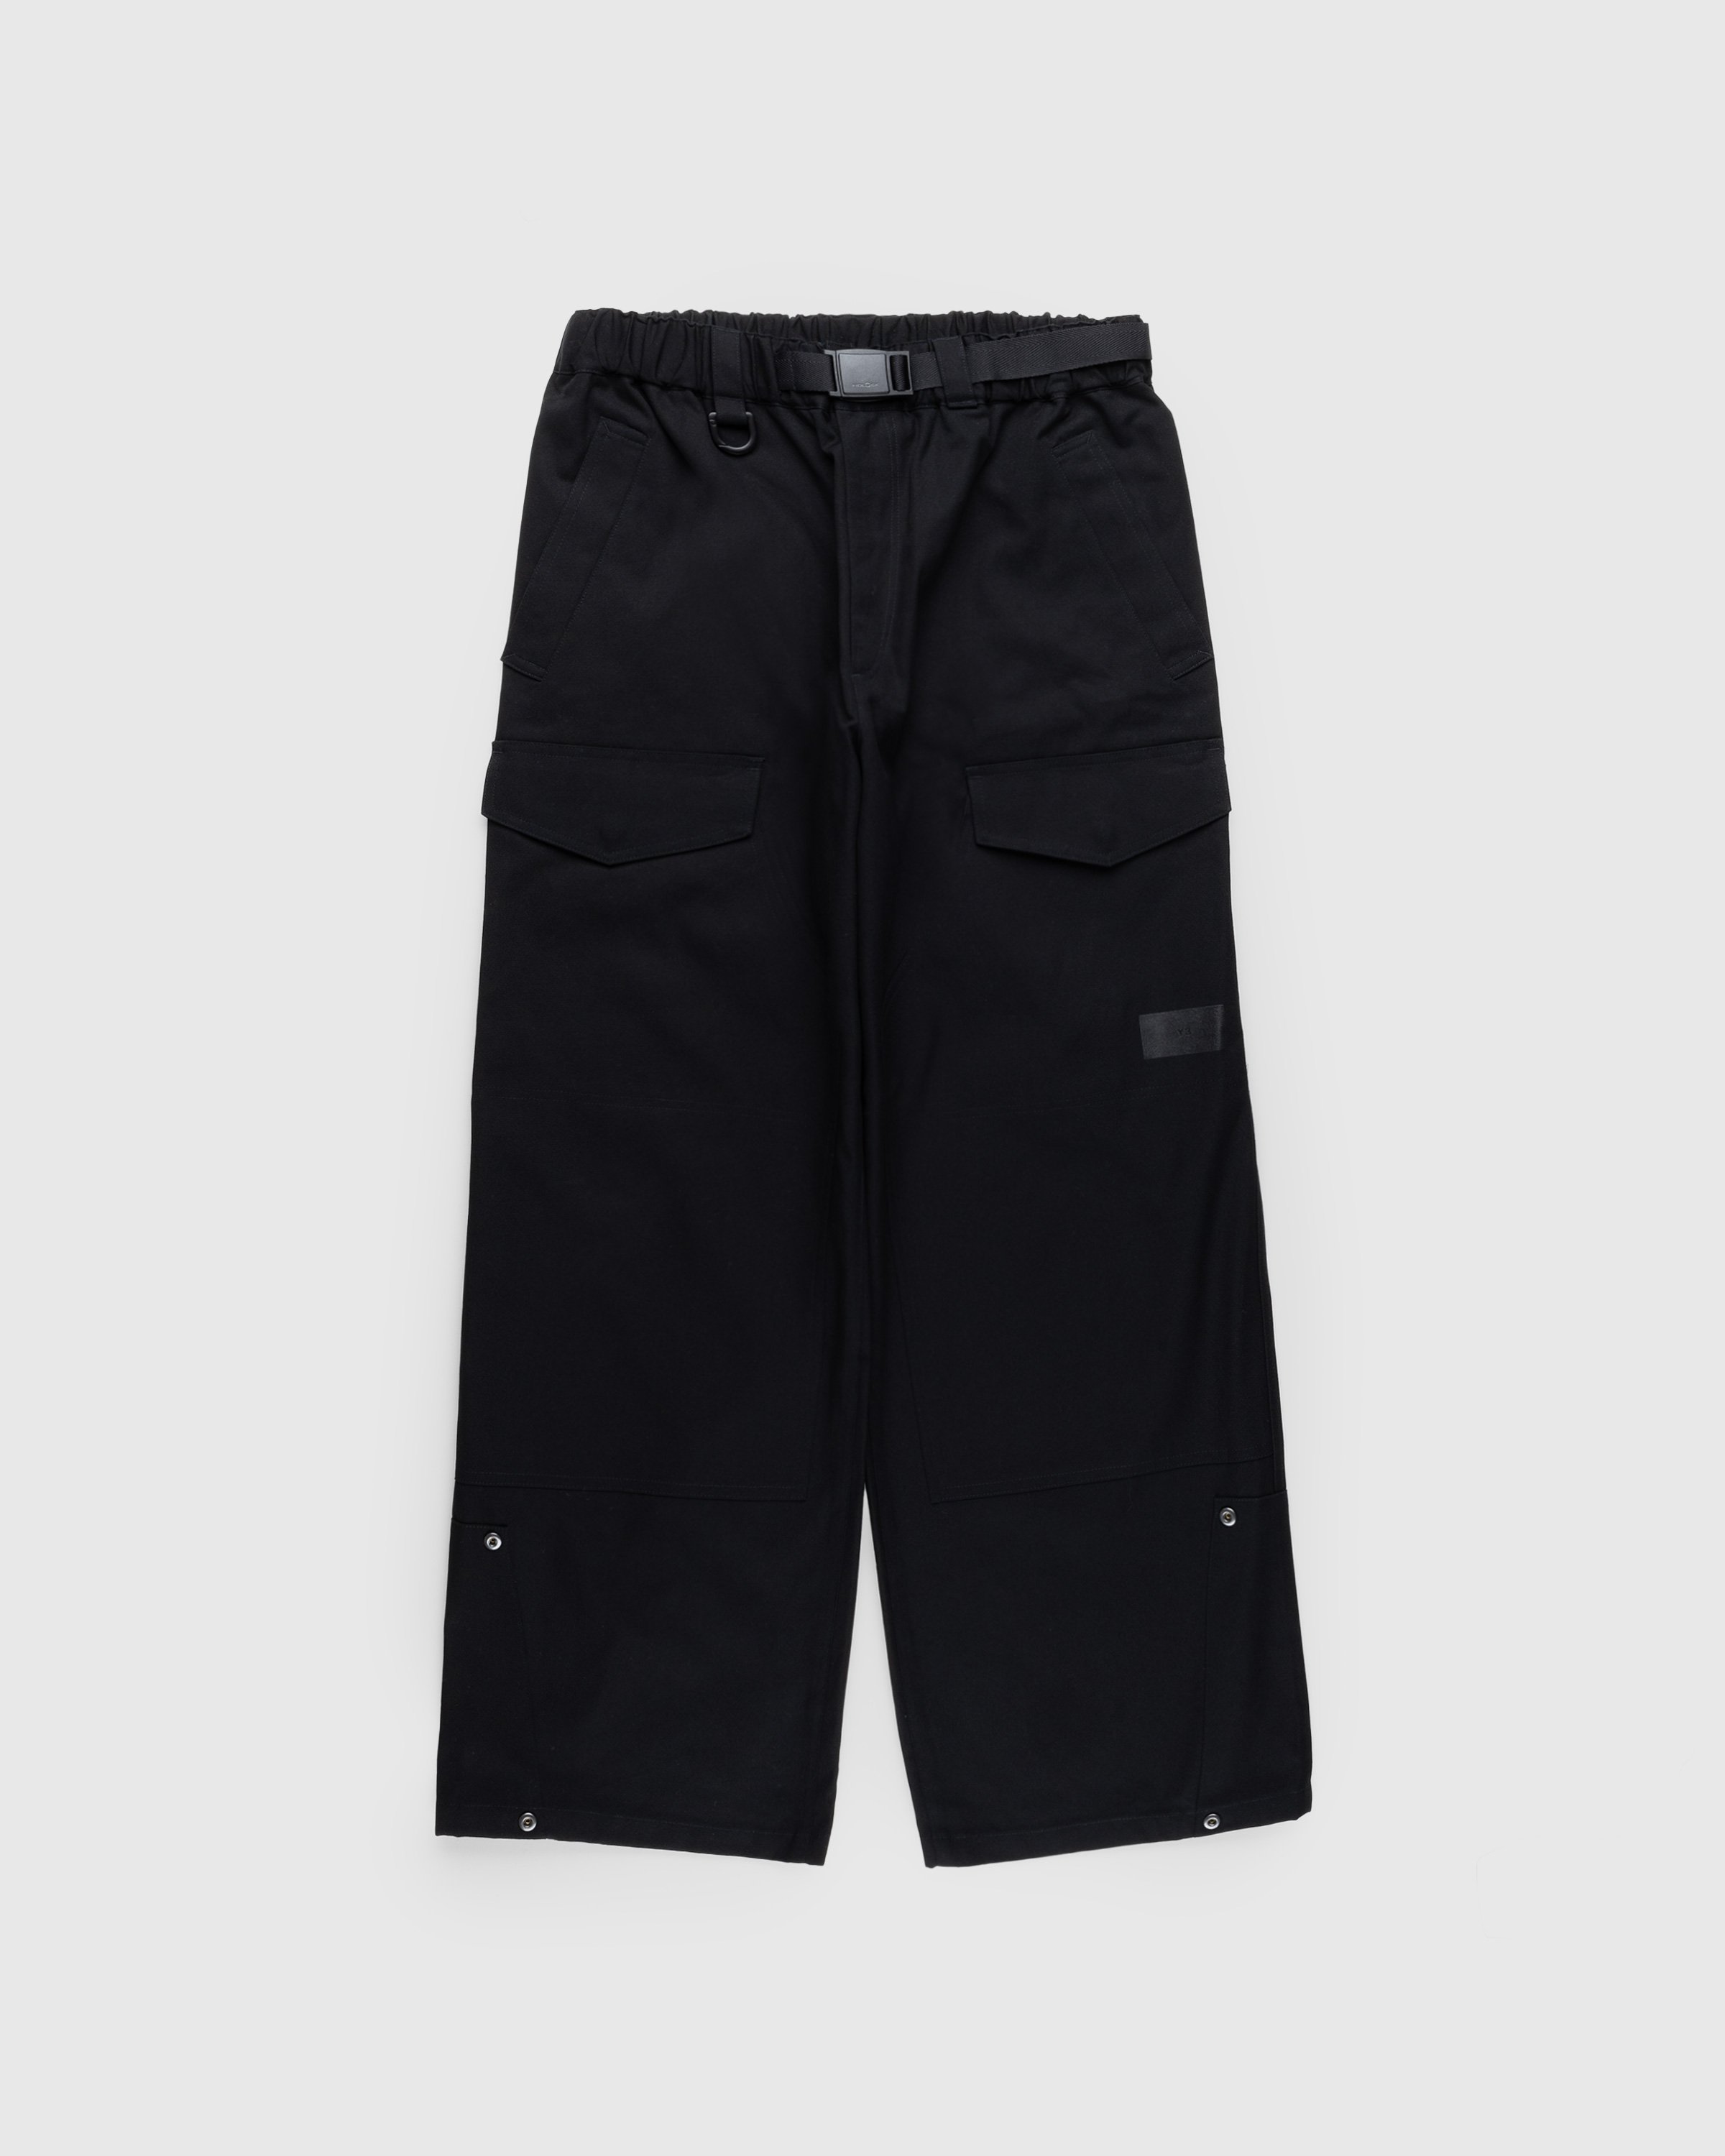 Y-3 - GFX Workwear Pants Black - Clothing - Black - Image 1